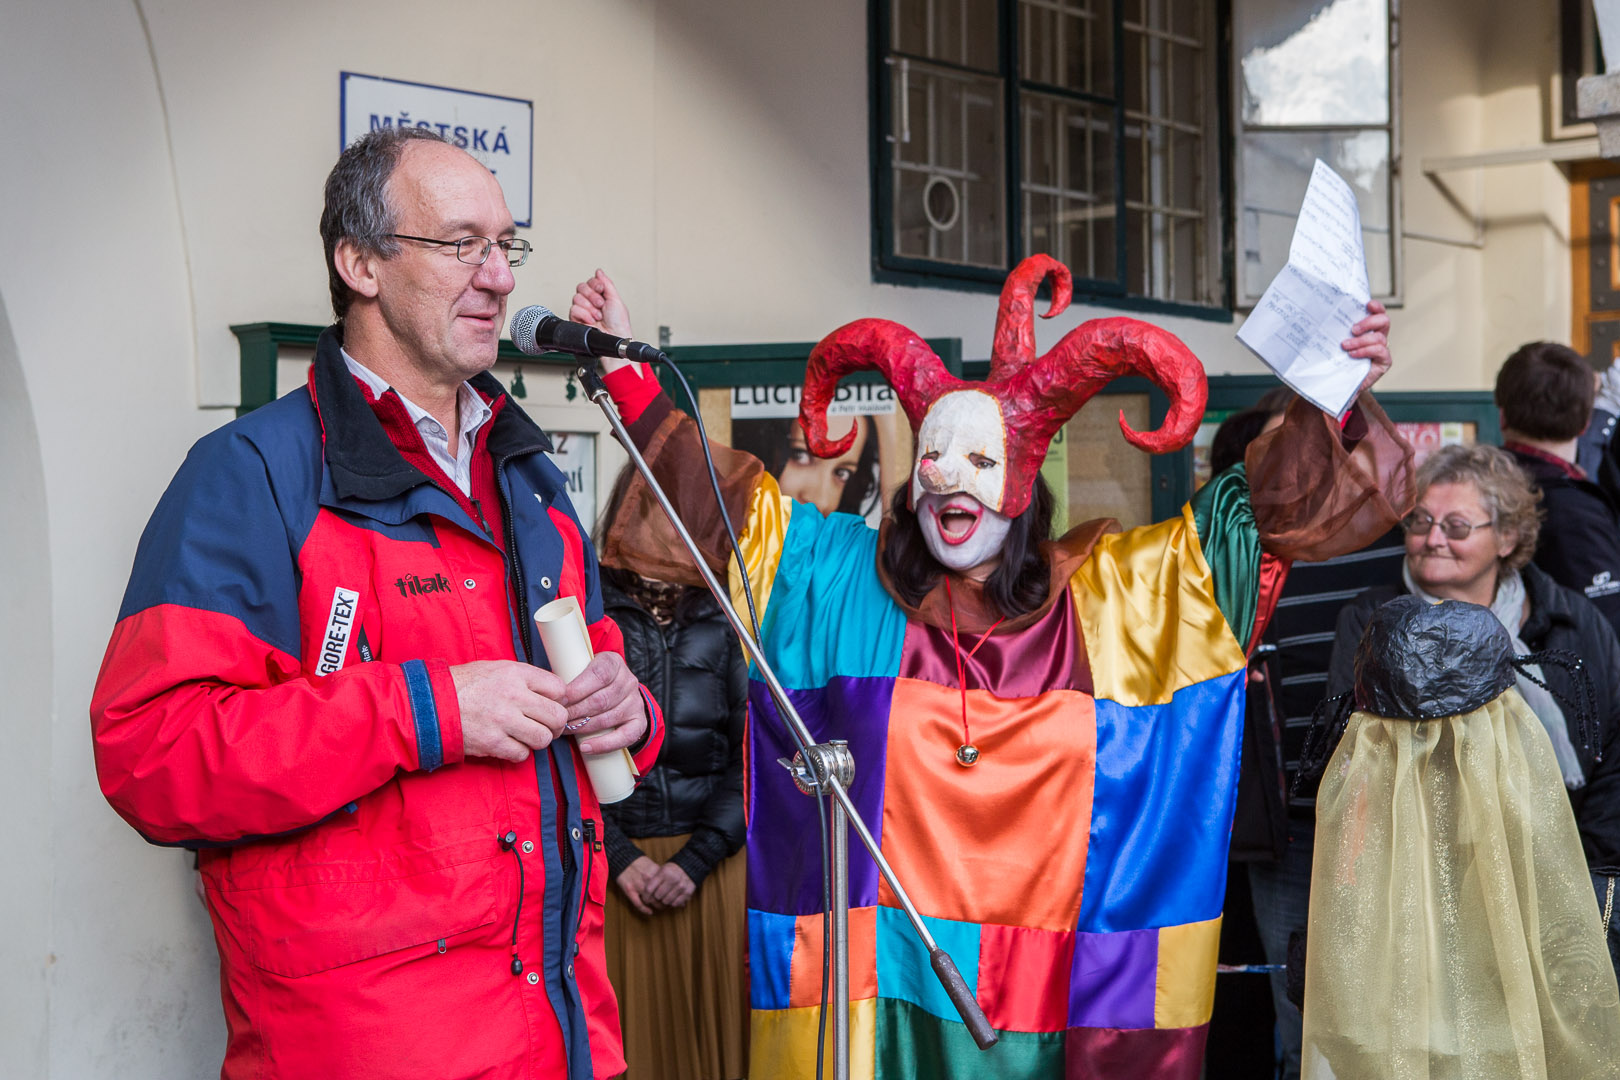 Carnival parade in Český Krumlov,  4th March 2014